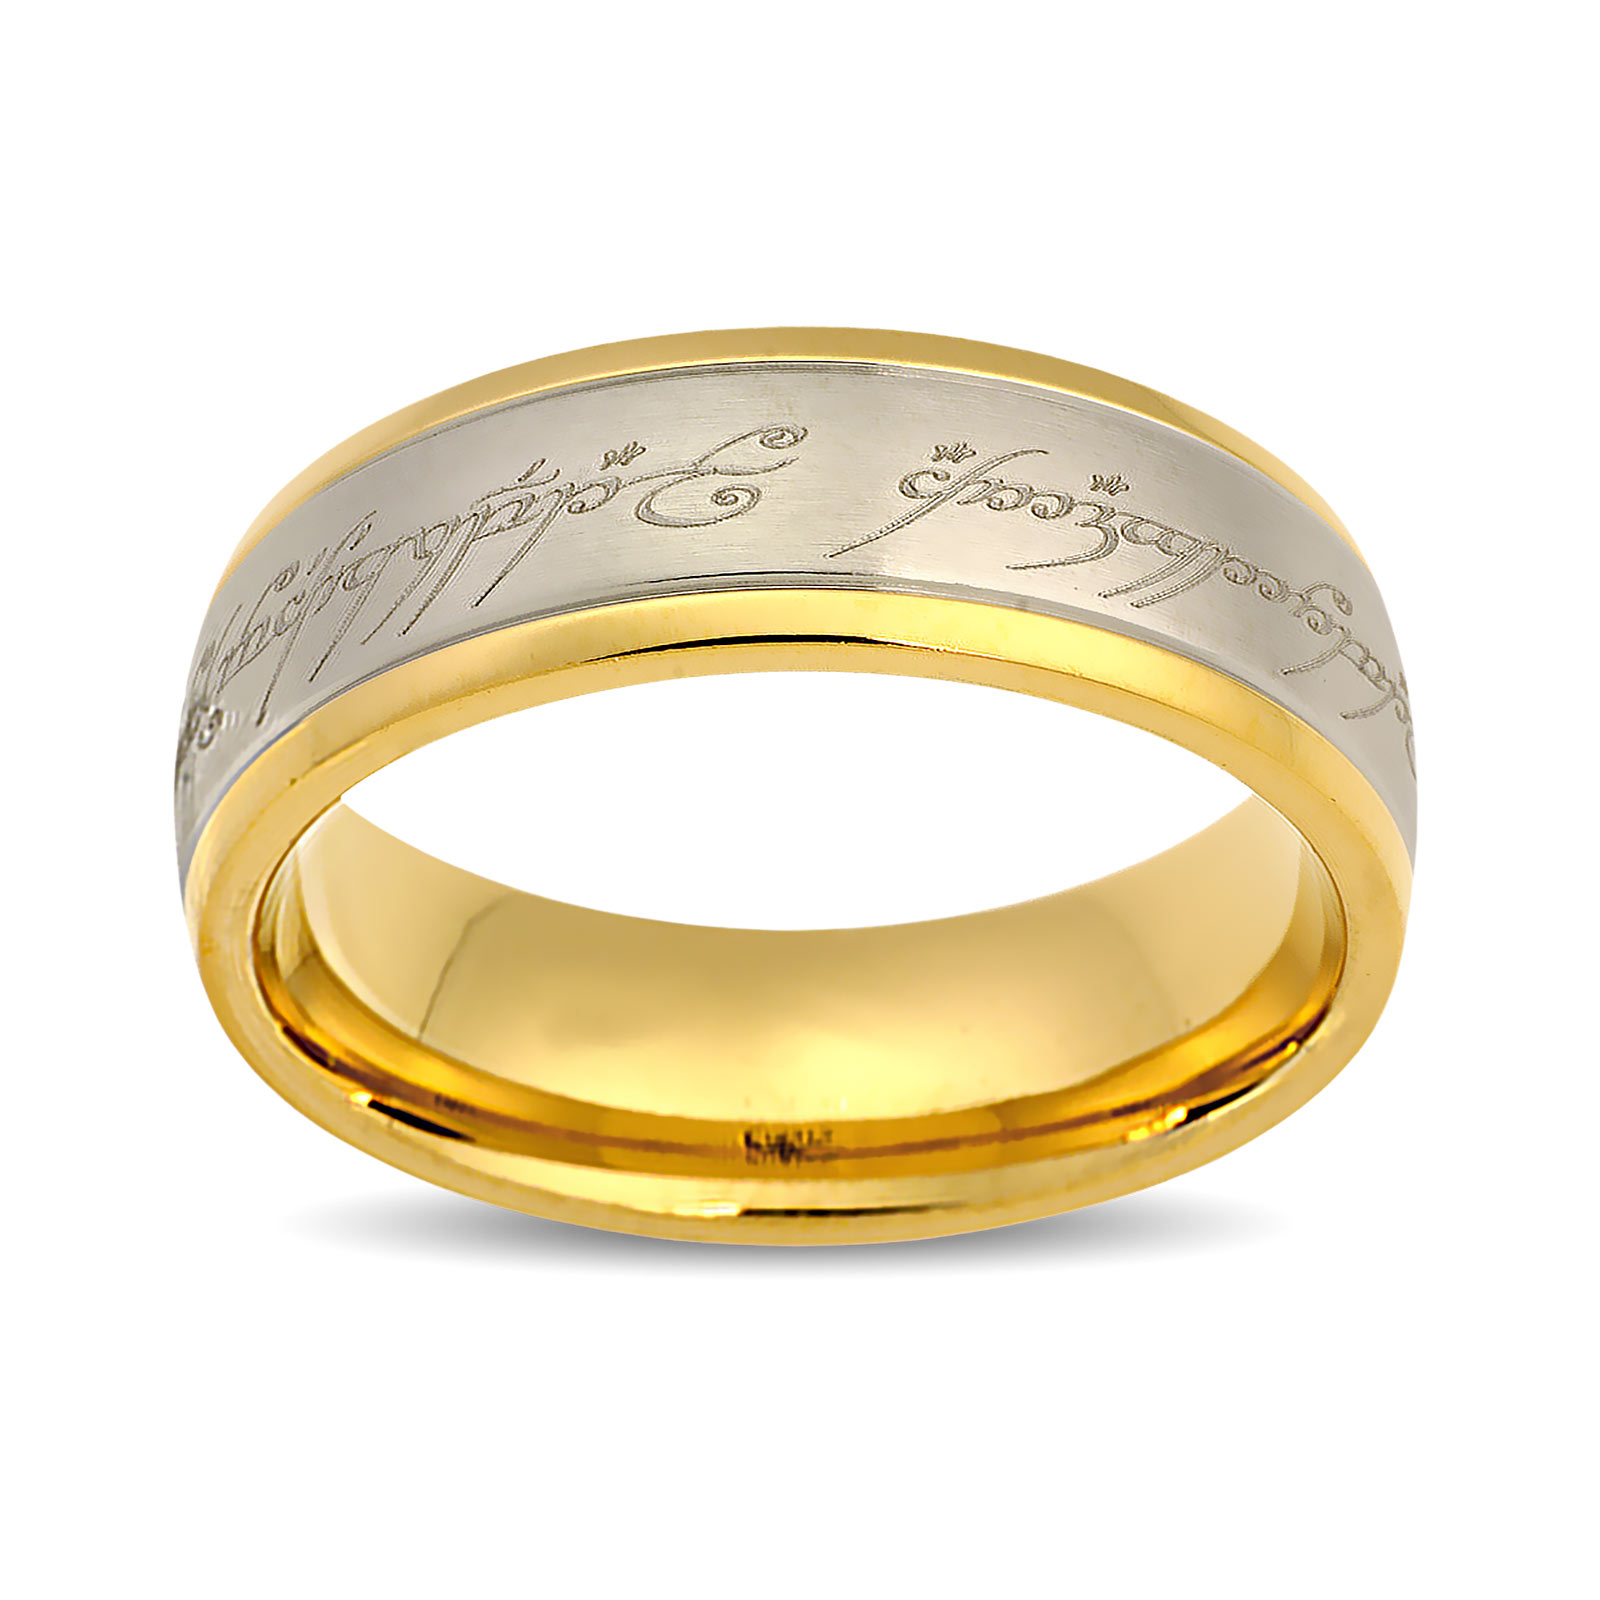 Herr der Ringe - Der Eine Ring Edelstahl vergoldet